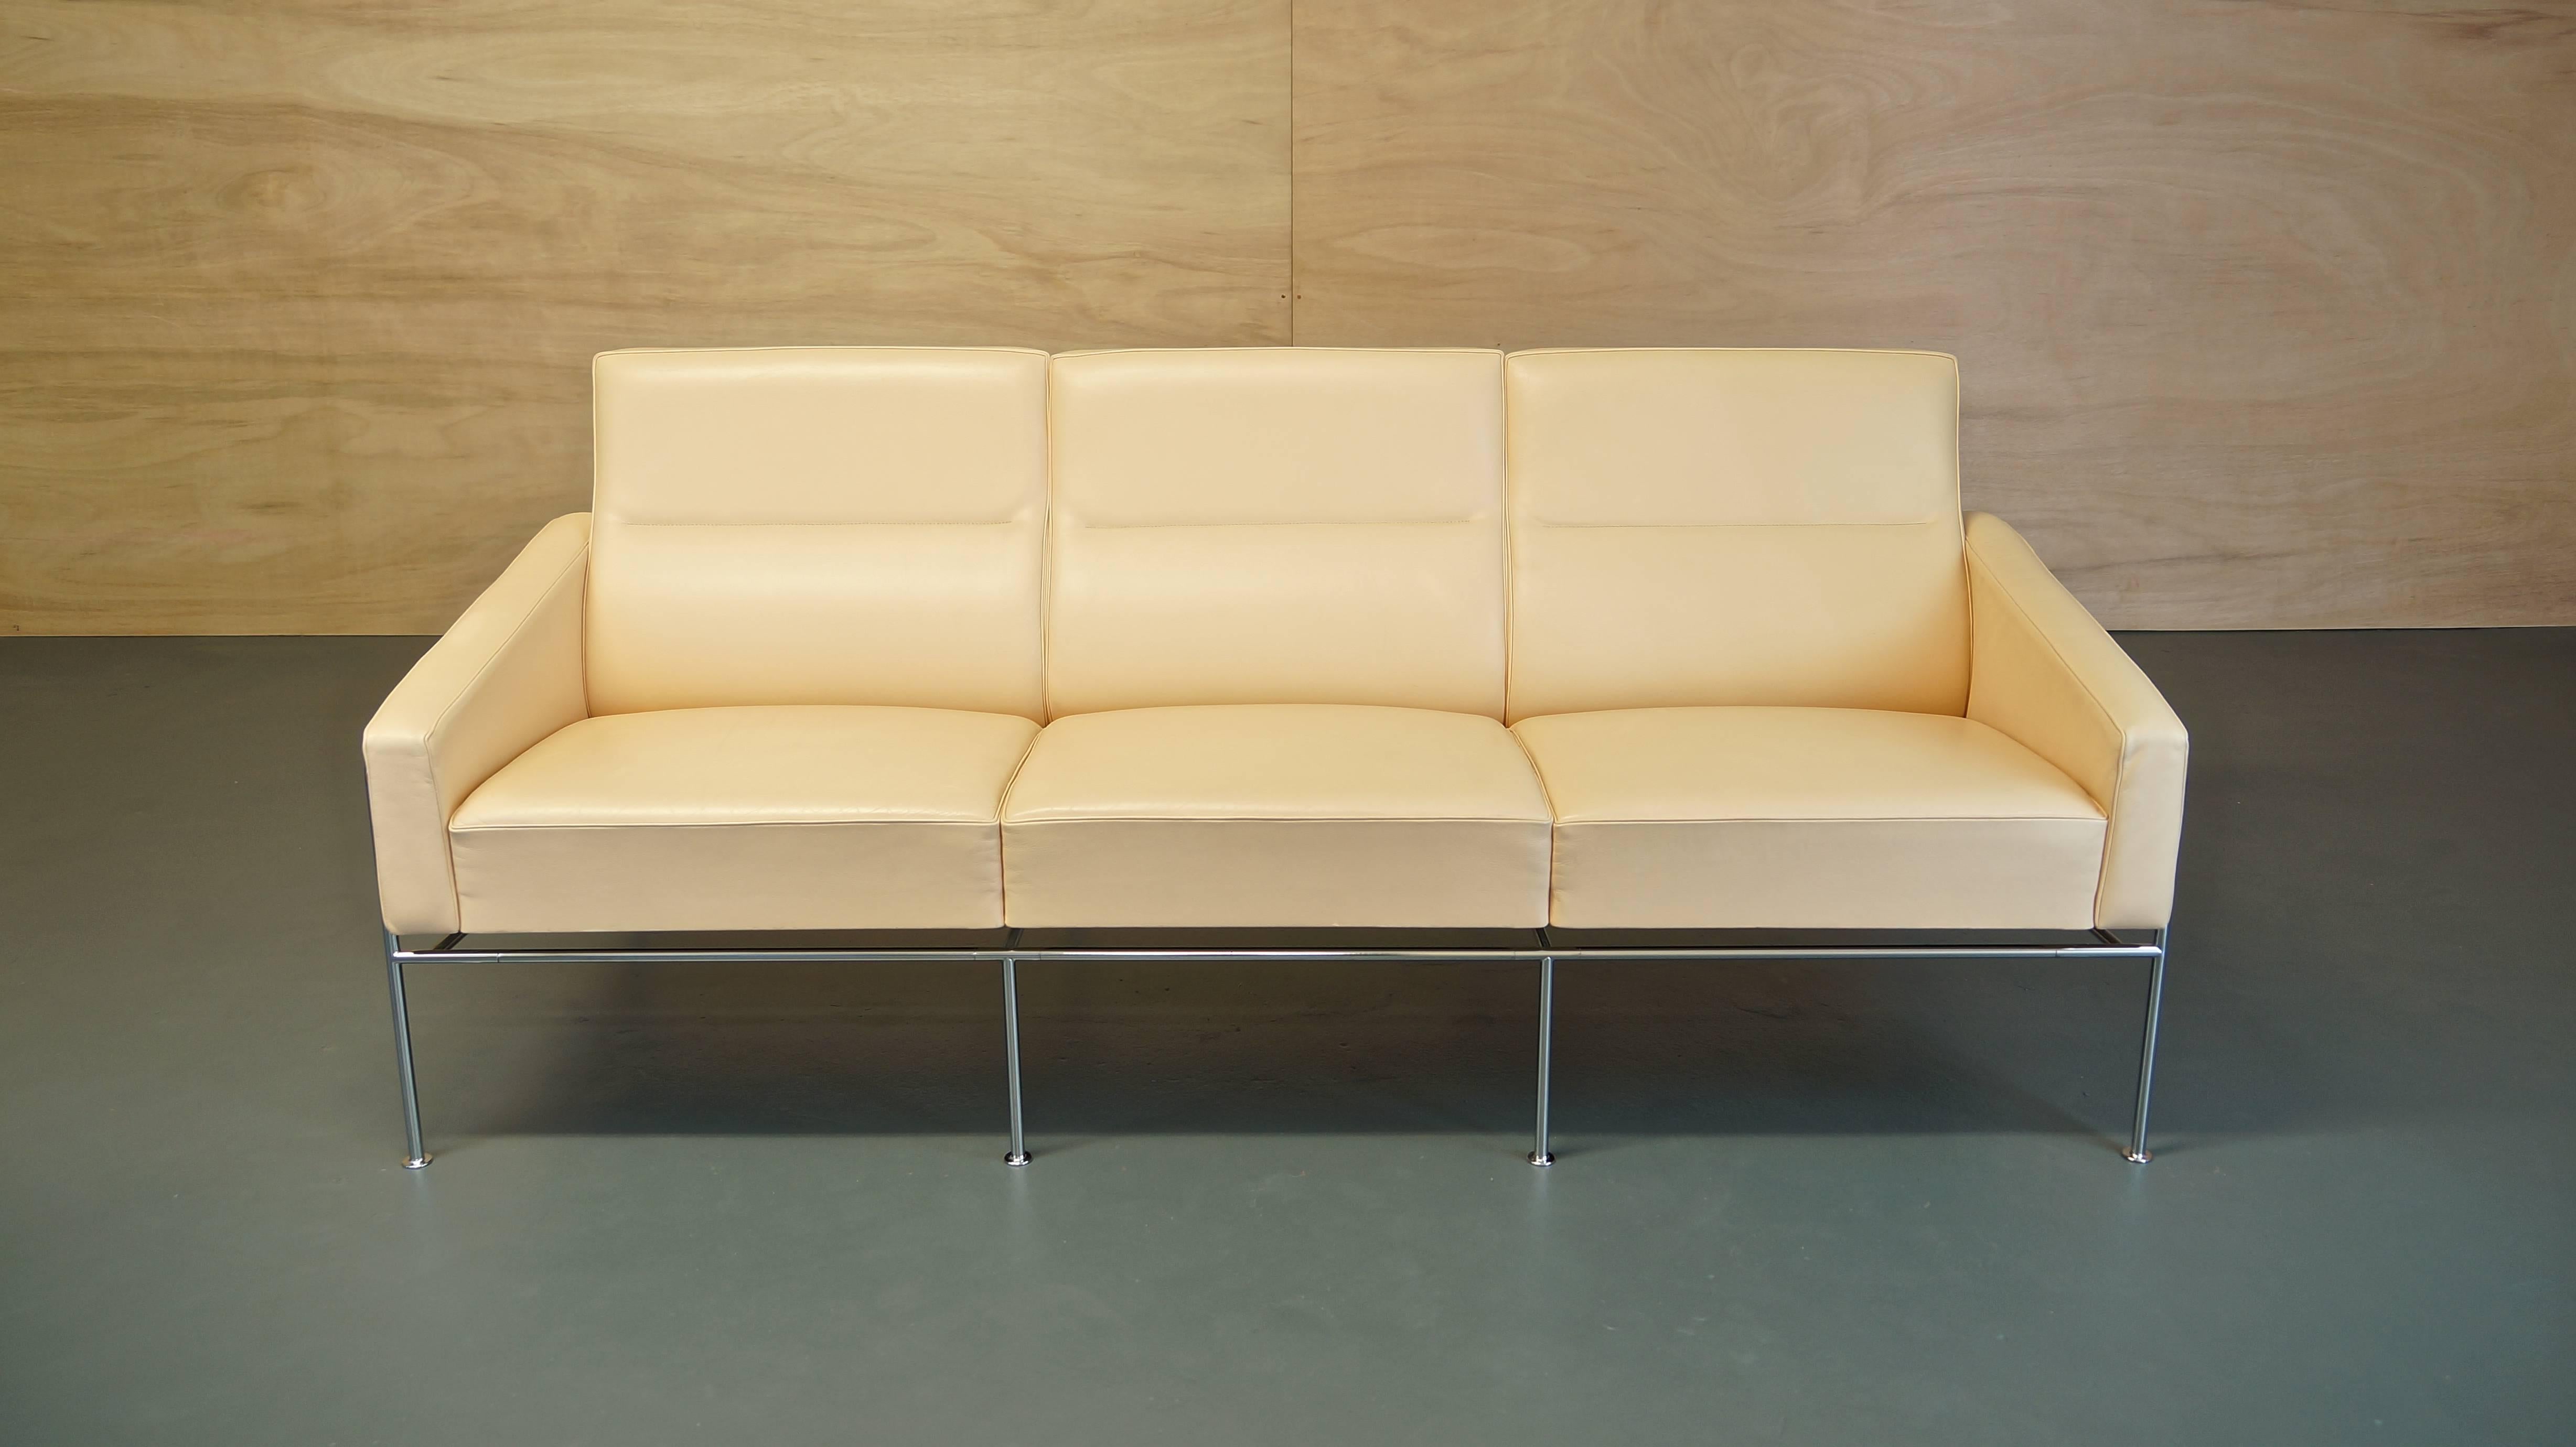 Danish Vintage Arne Jacobsen Series 3303 Leather Sofa by Fritz Hansen For Sale 1